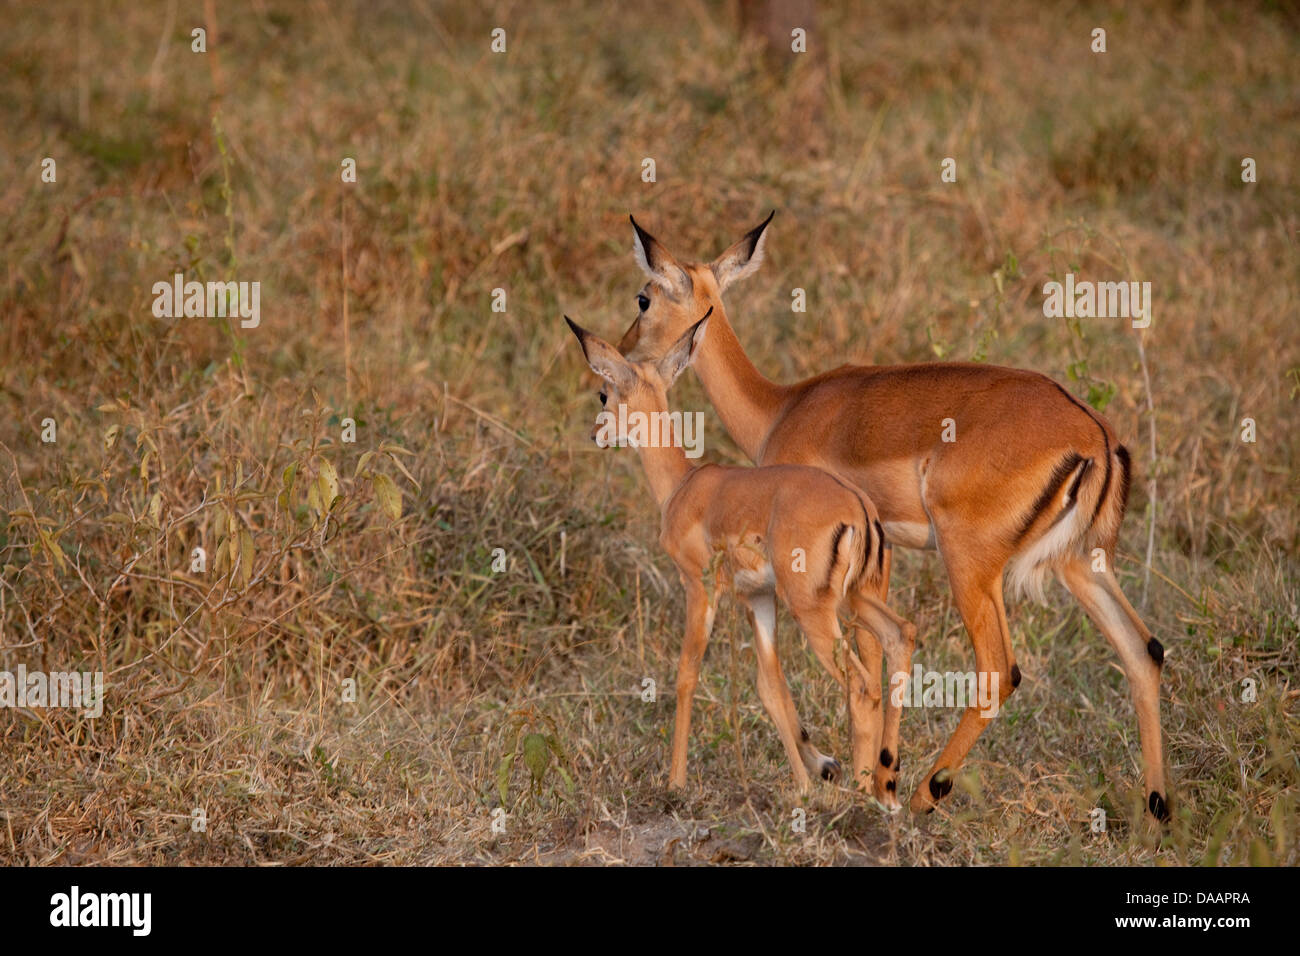 Impala, antelopes, animals, mammals, cloven-hoofed animals, wilderness, nature, Wildlife, wild animals, Africa, savanna, Uganda, Stock Photo